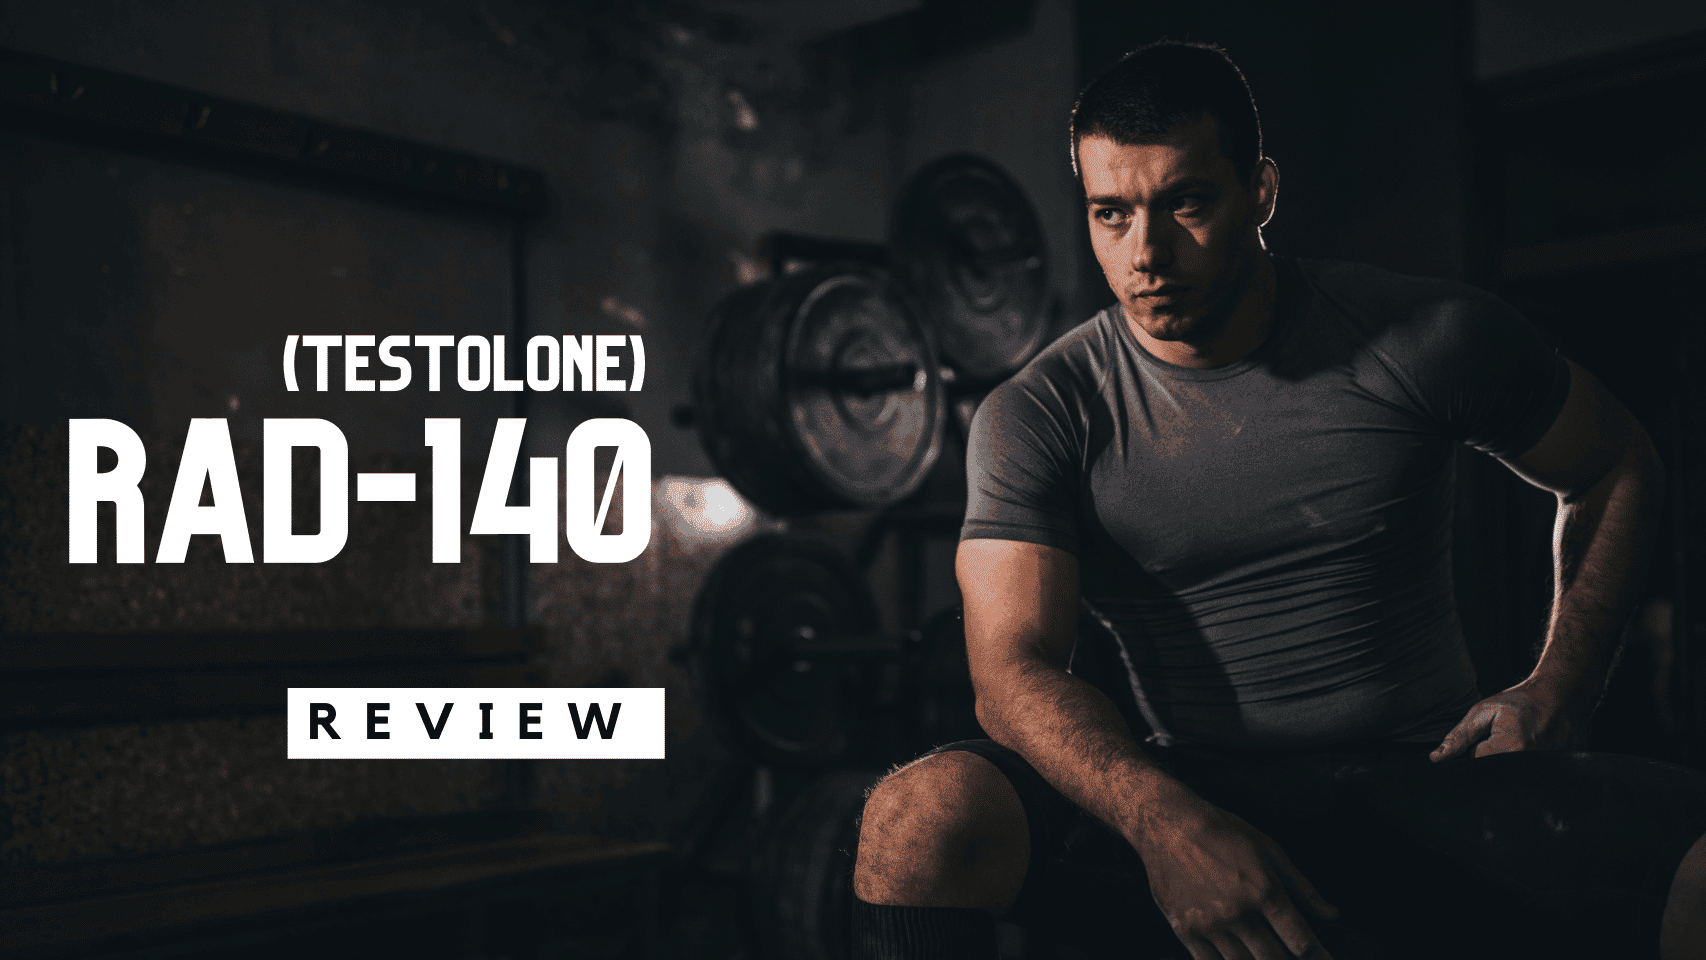 RAD 140 Testolone review 2